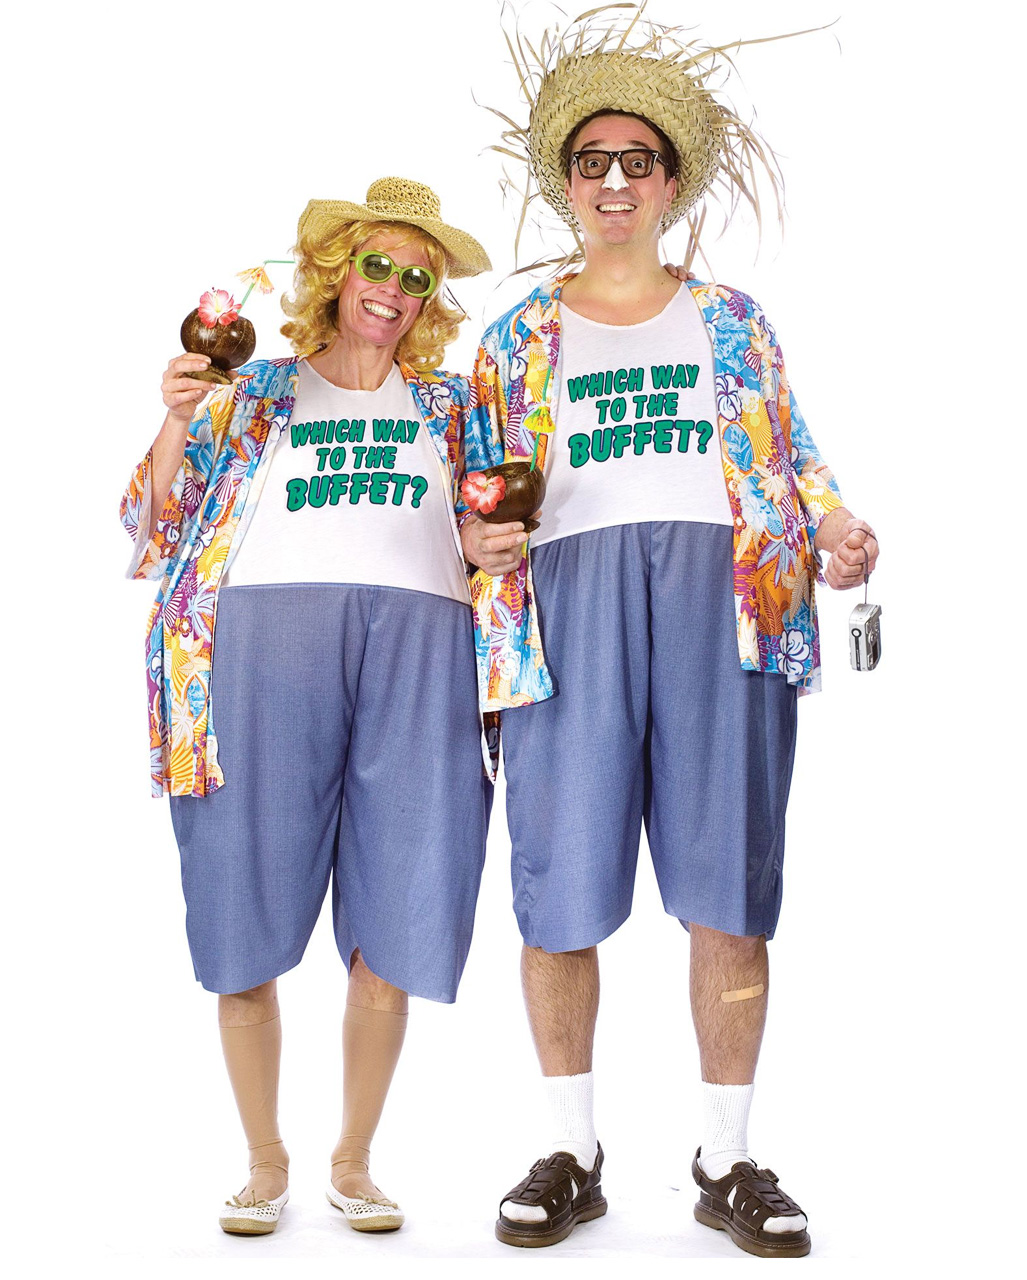 Typical Tourist Costume | Funny Tourist Costume 